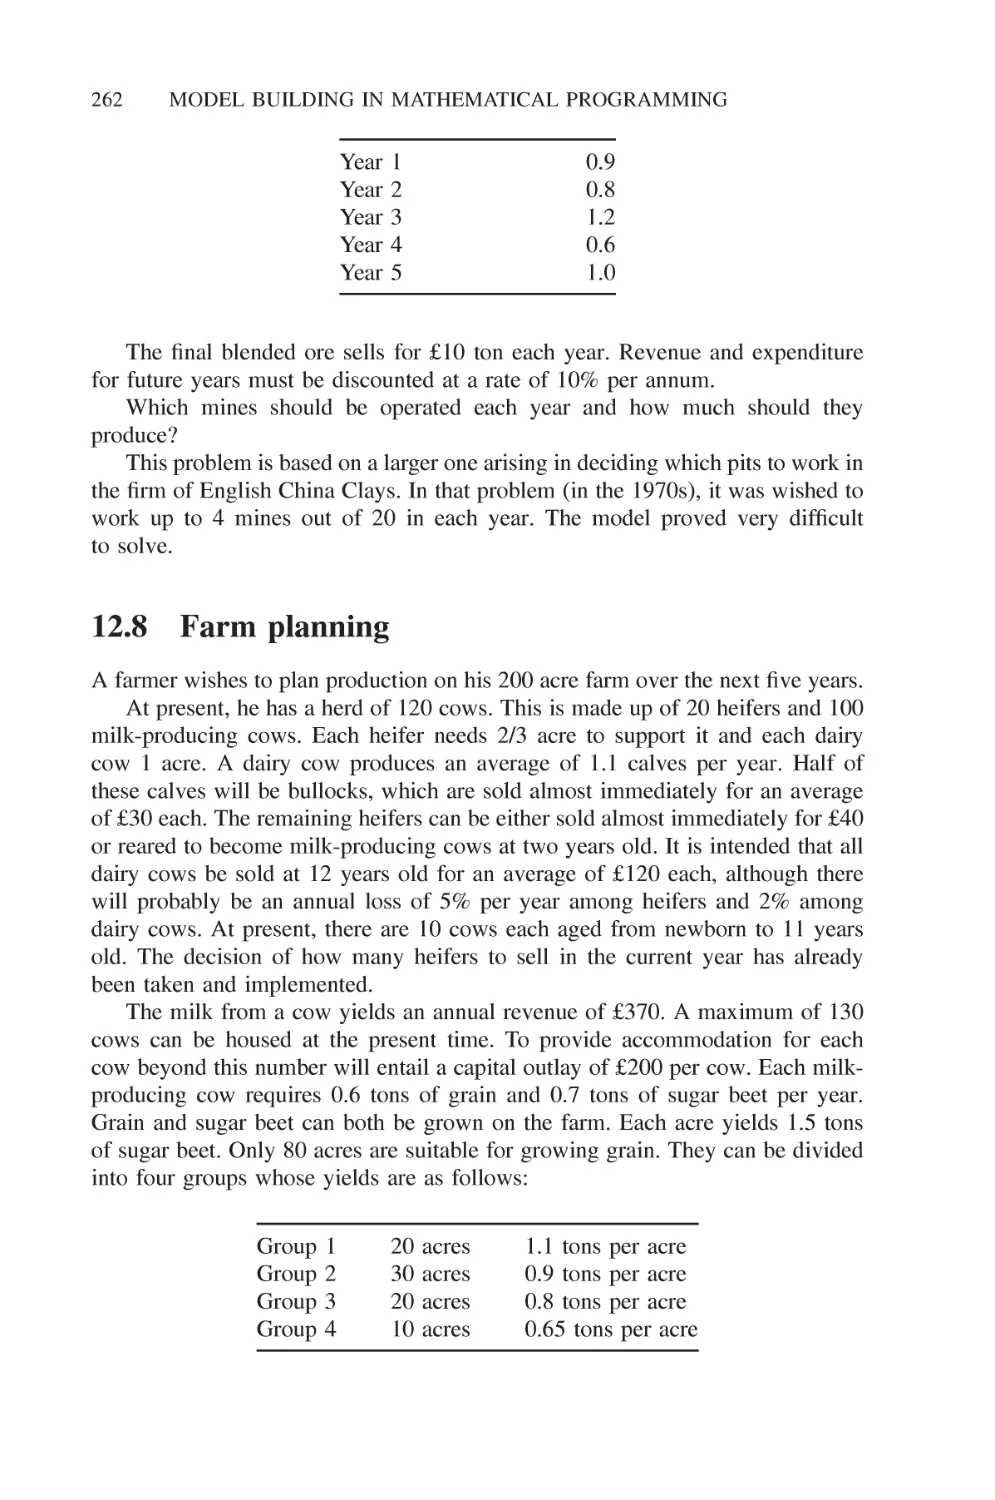 12.8 Farm planning